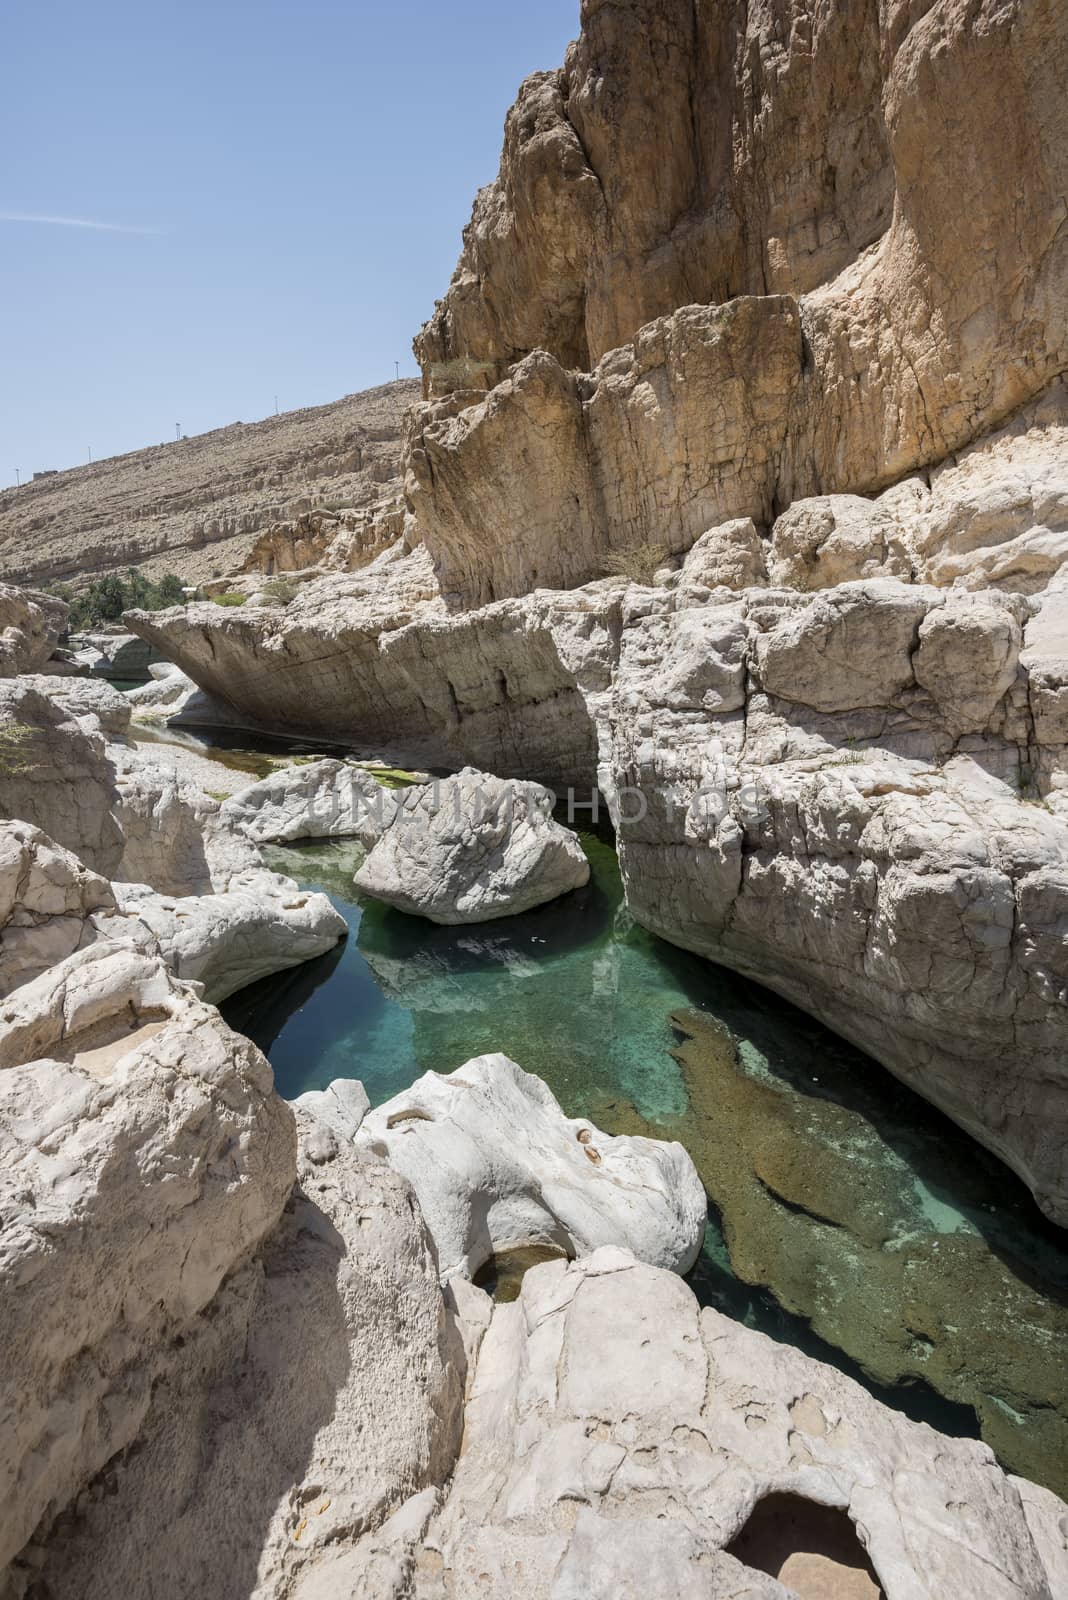 River and pool in the canyon of Wadi Bani Khalid, Oman by GABIS